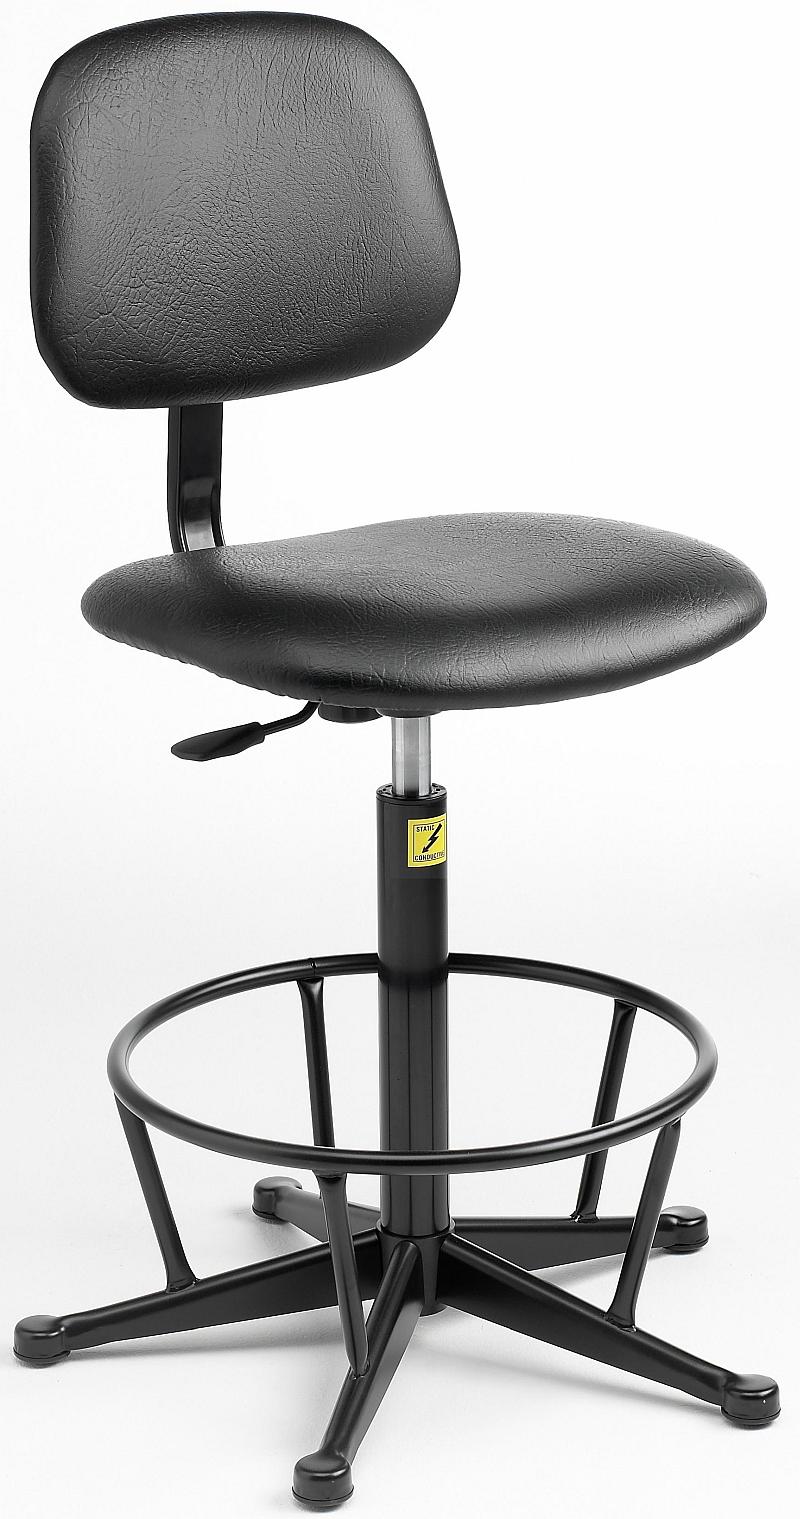 AS3 vinyl static dissipative chair